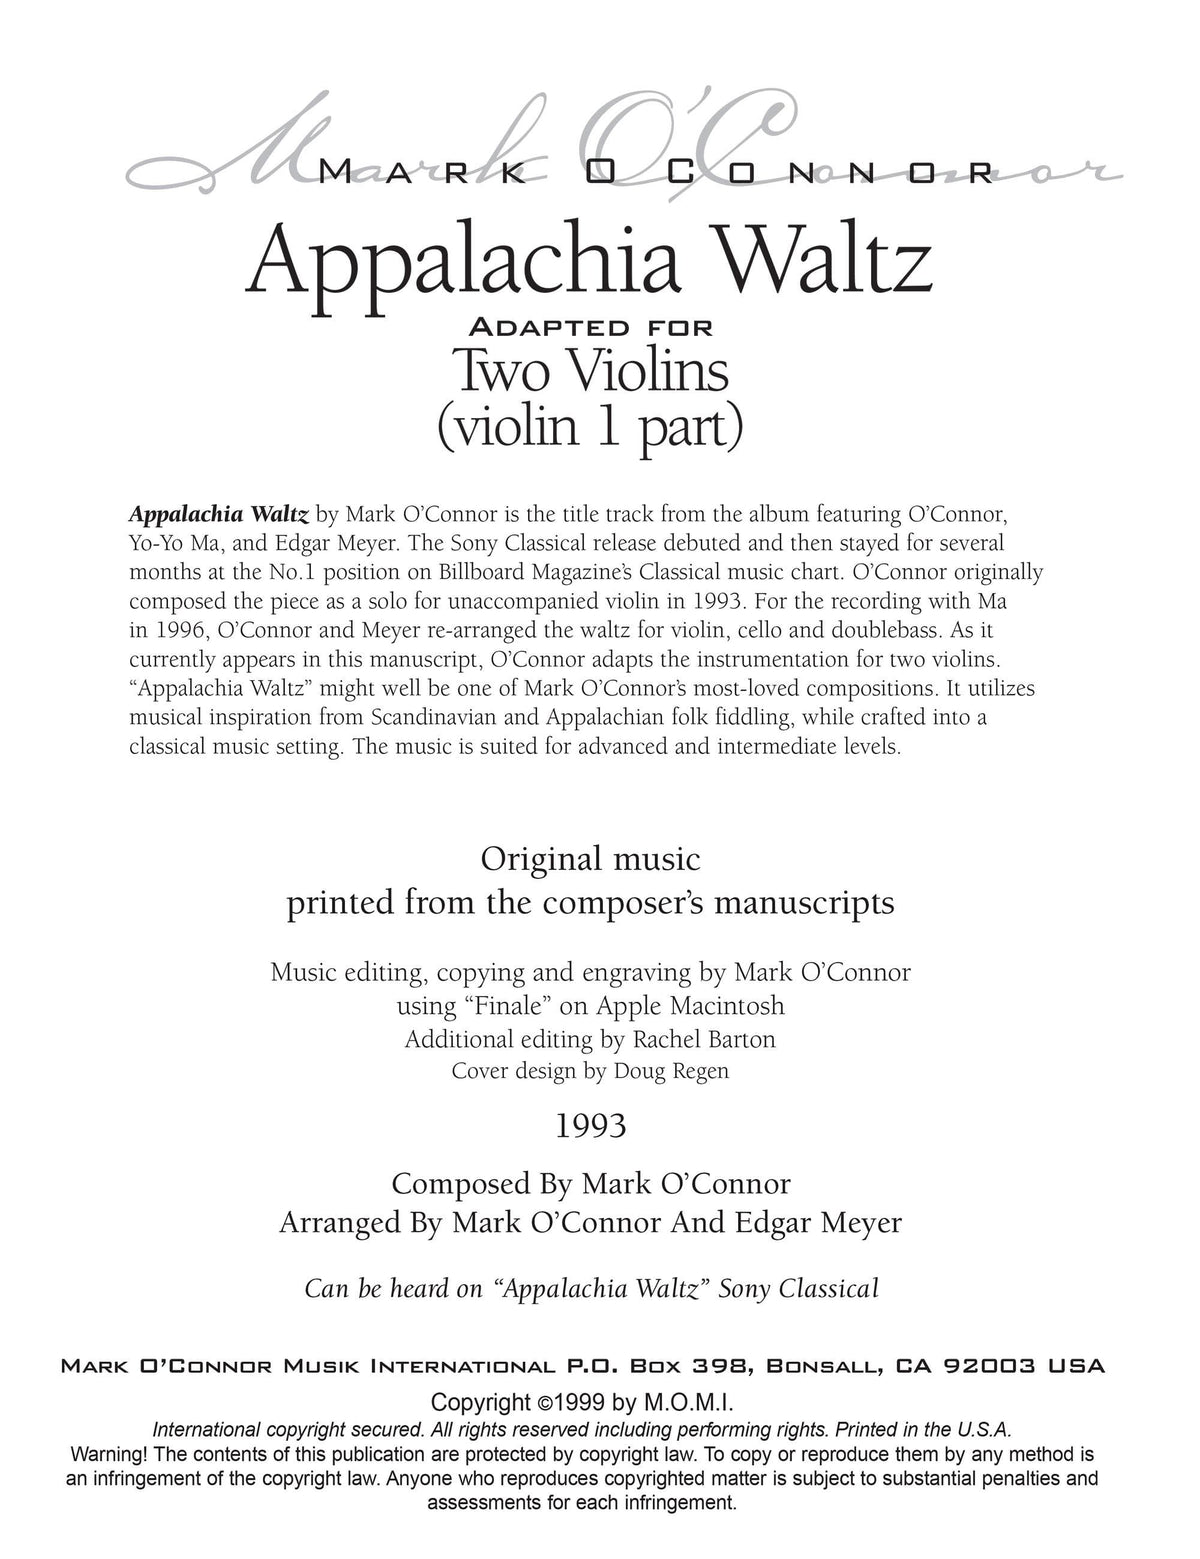 O'Connor, Mark - Appalachia Waltz for 2 Violins - Violin 1 - Digital Download